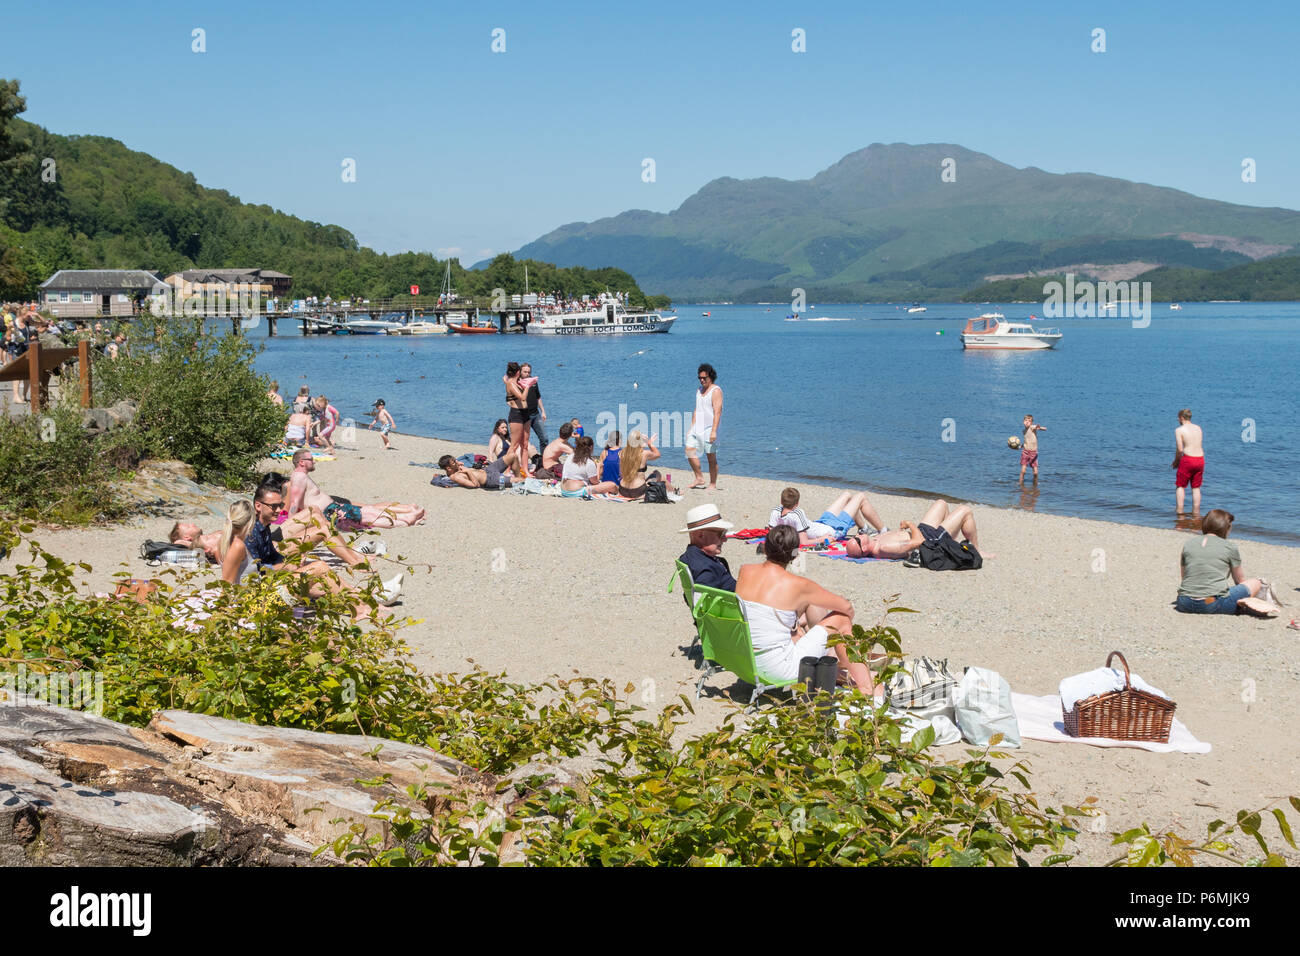 Luss beach, Loch Lomond and Ben Lomond busy on a hot summer day, Scotland, UK Stock Photo